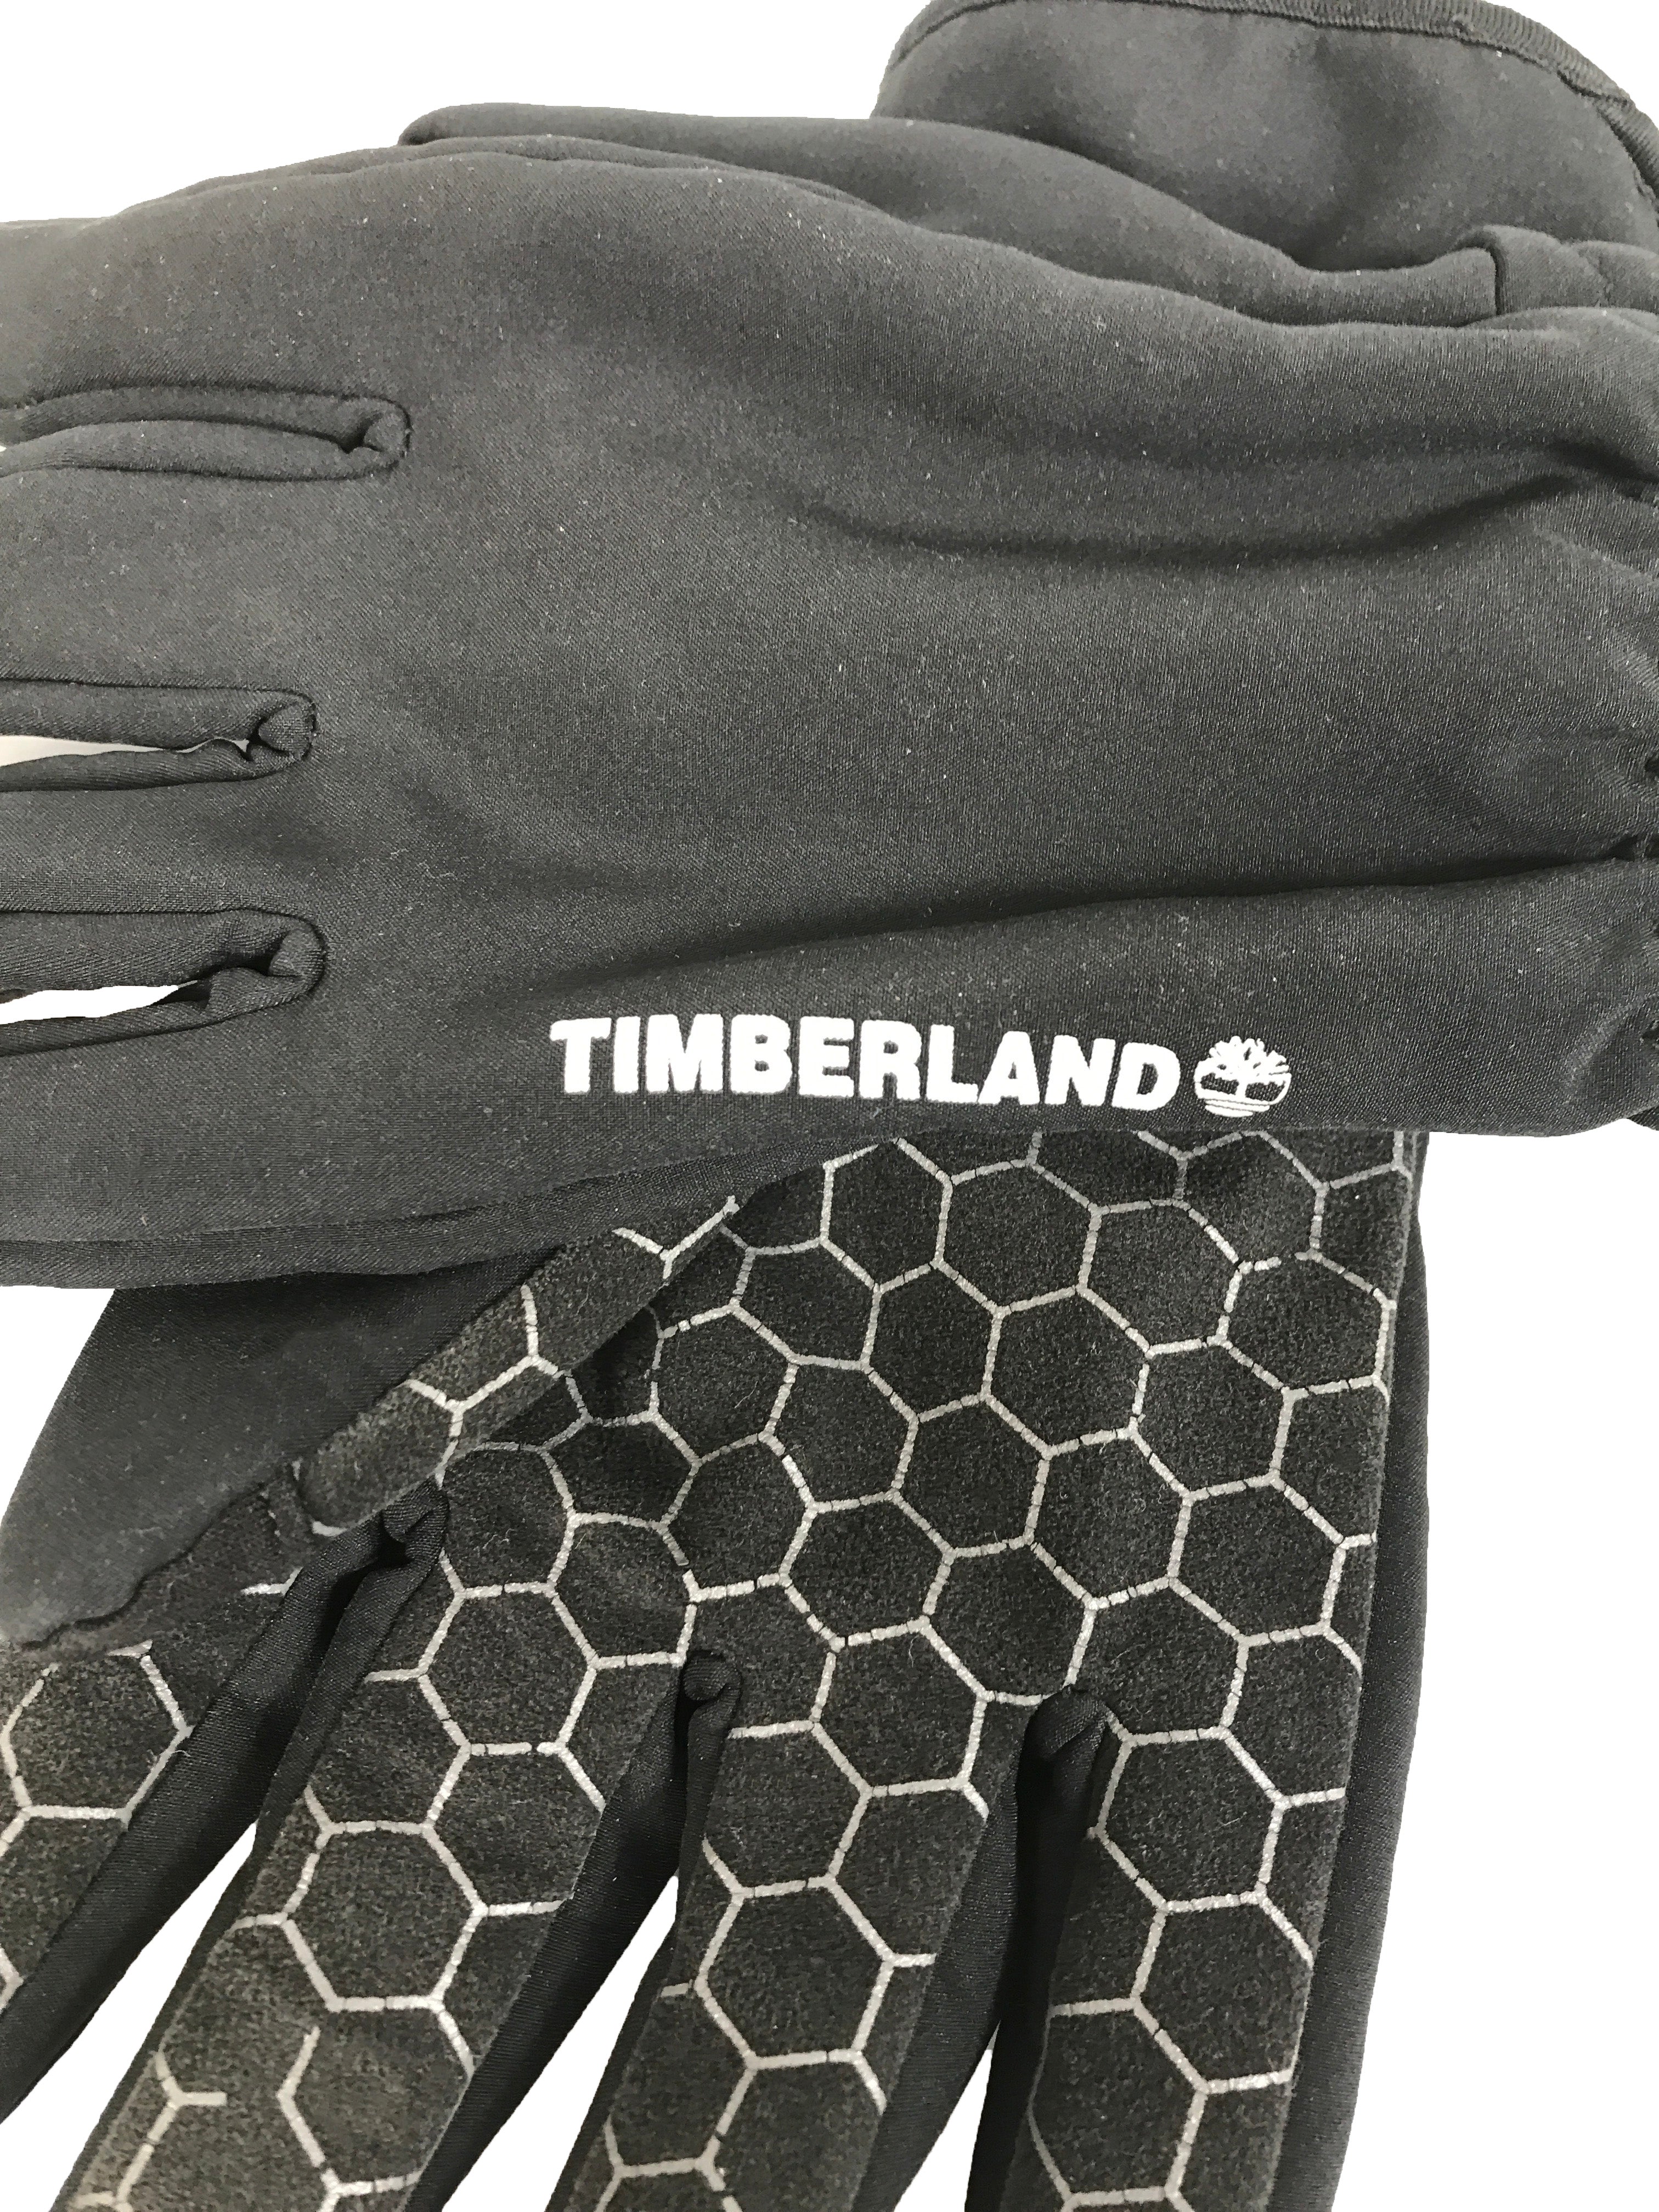 Timberland Black Gloves